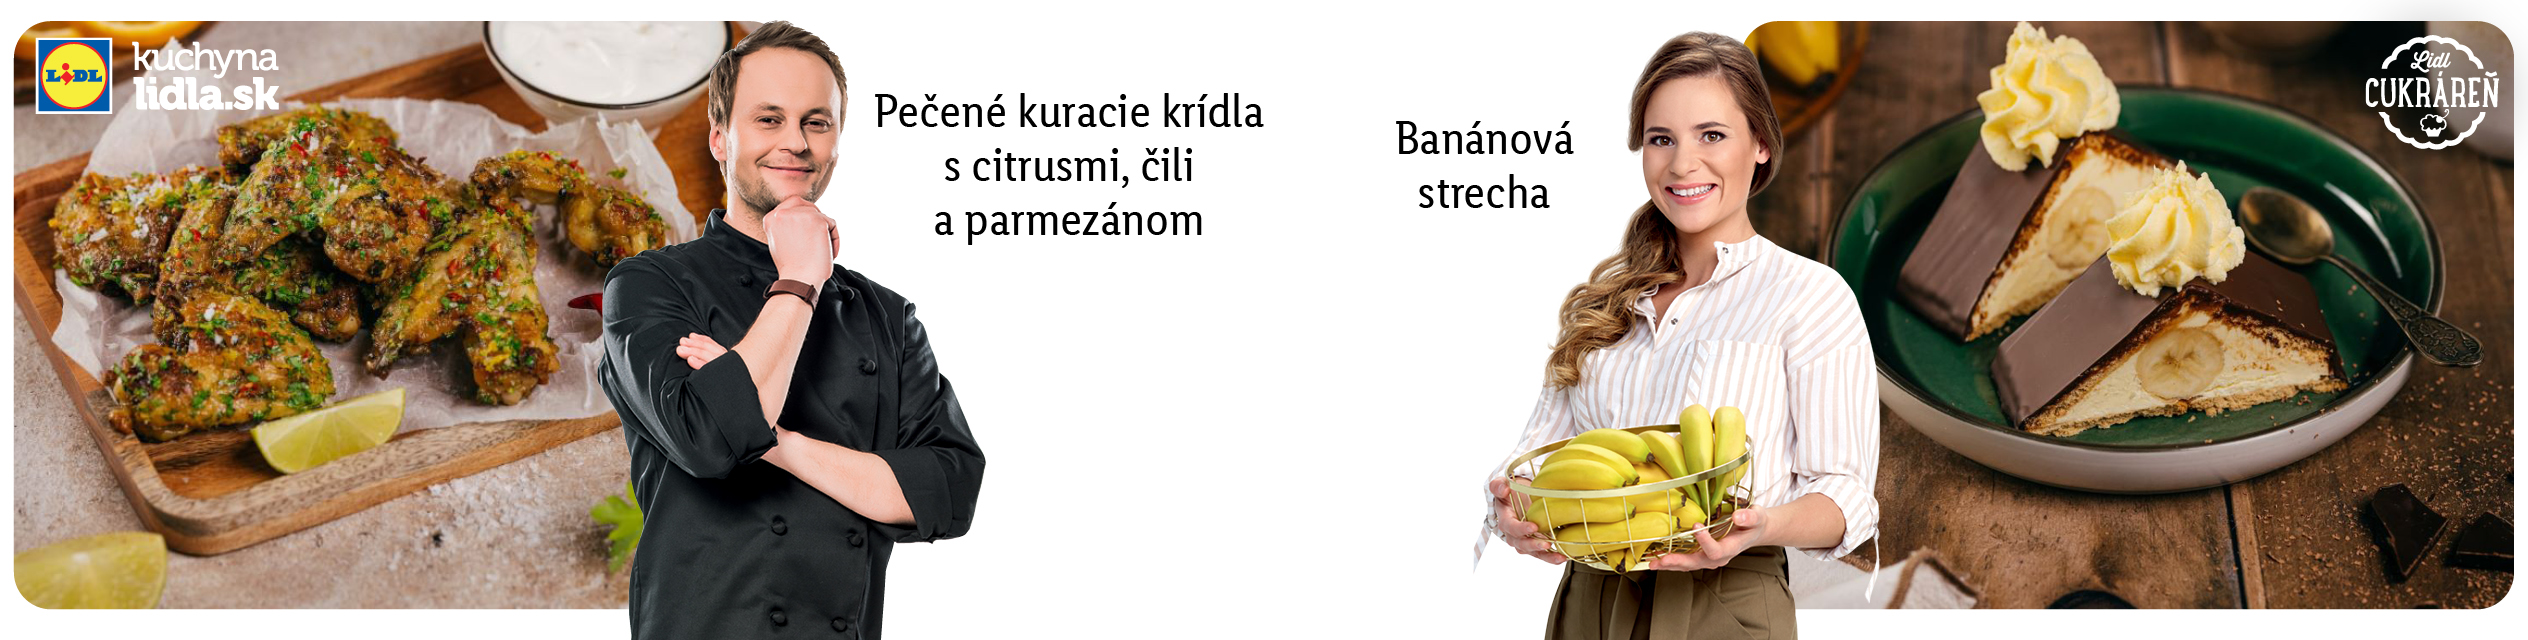 Recepty na kuchynalidla.sk